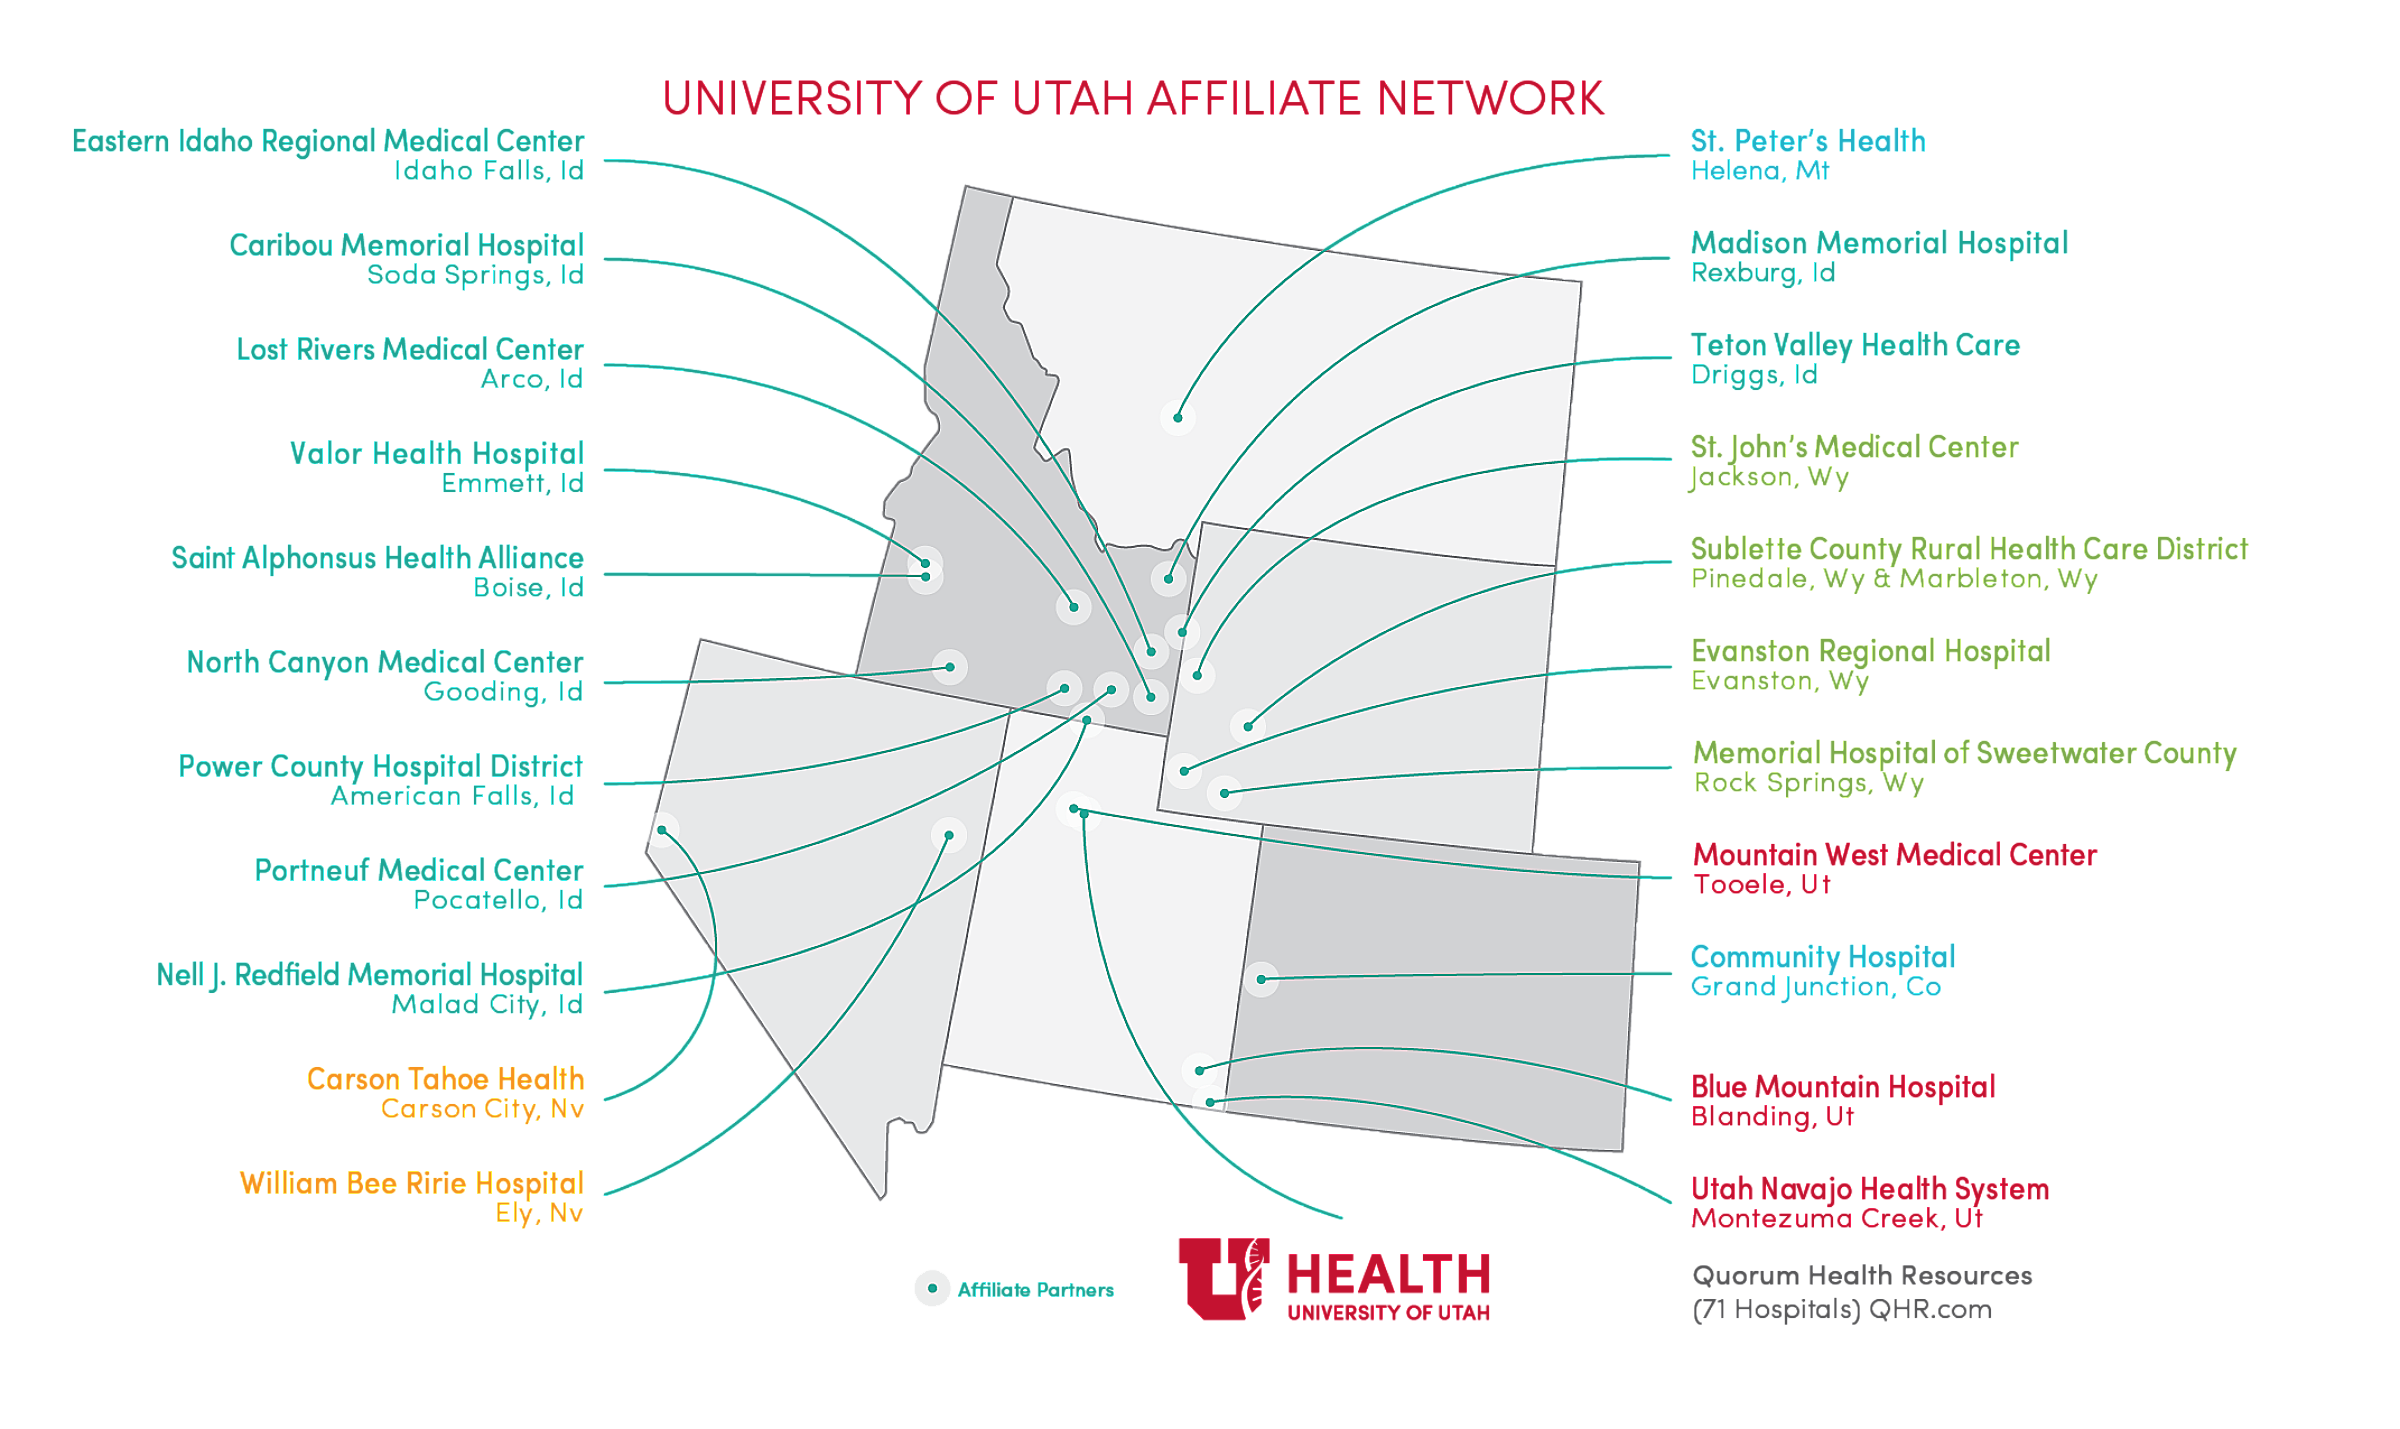 U of U Health Affiliate Network Map